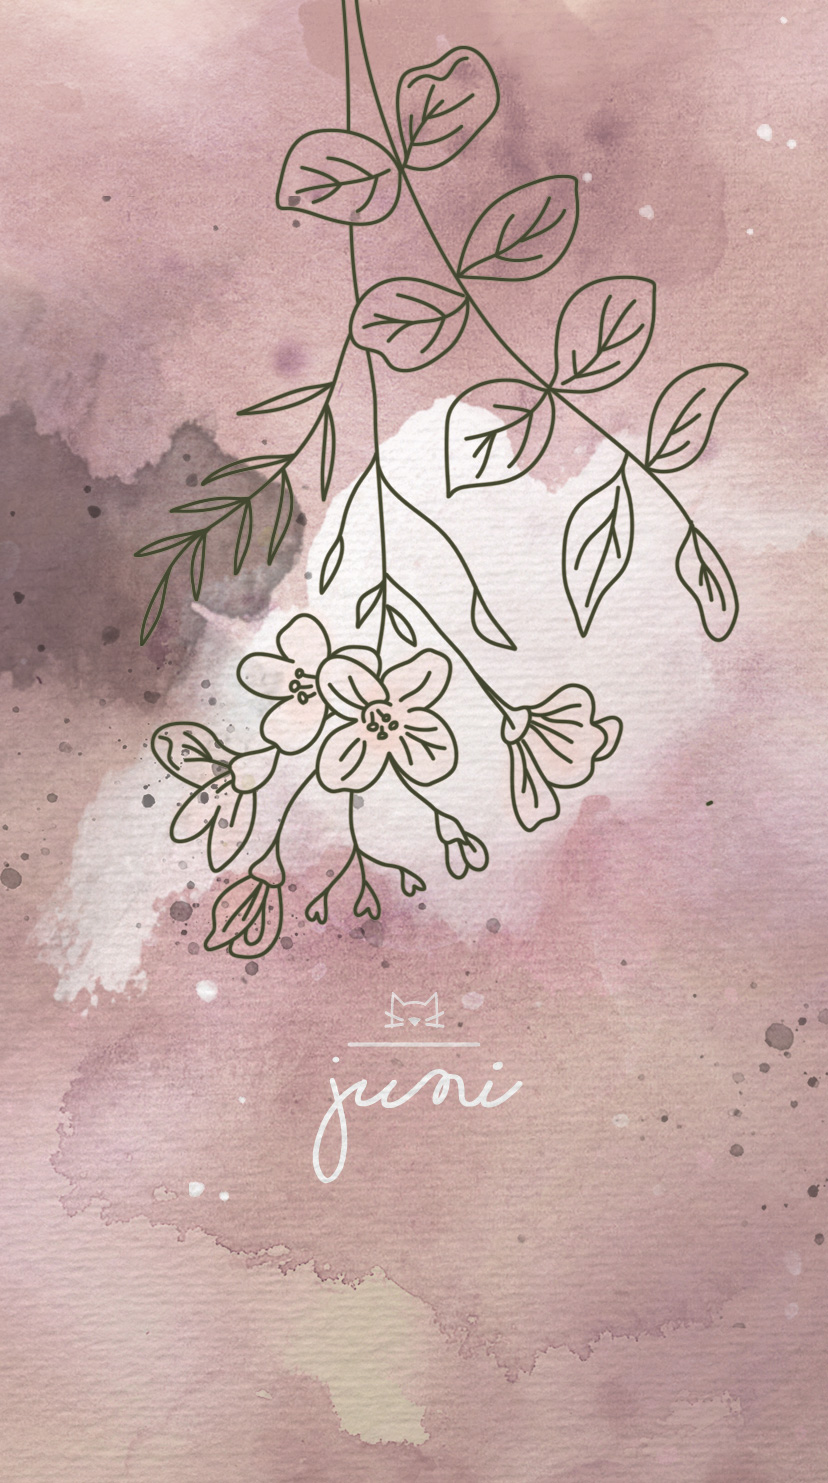 Juni-Wallpaper in Rosa mit Wiesenschaumkraut